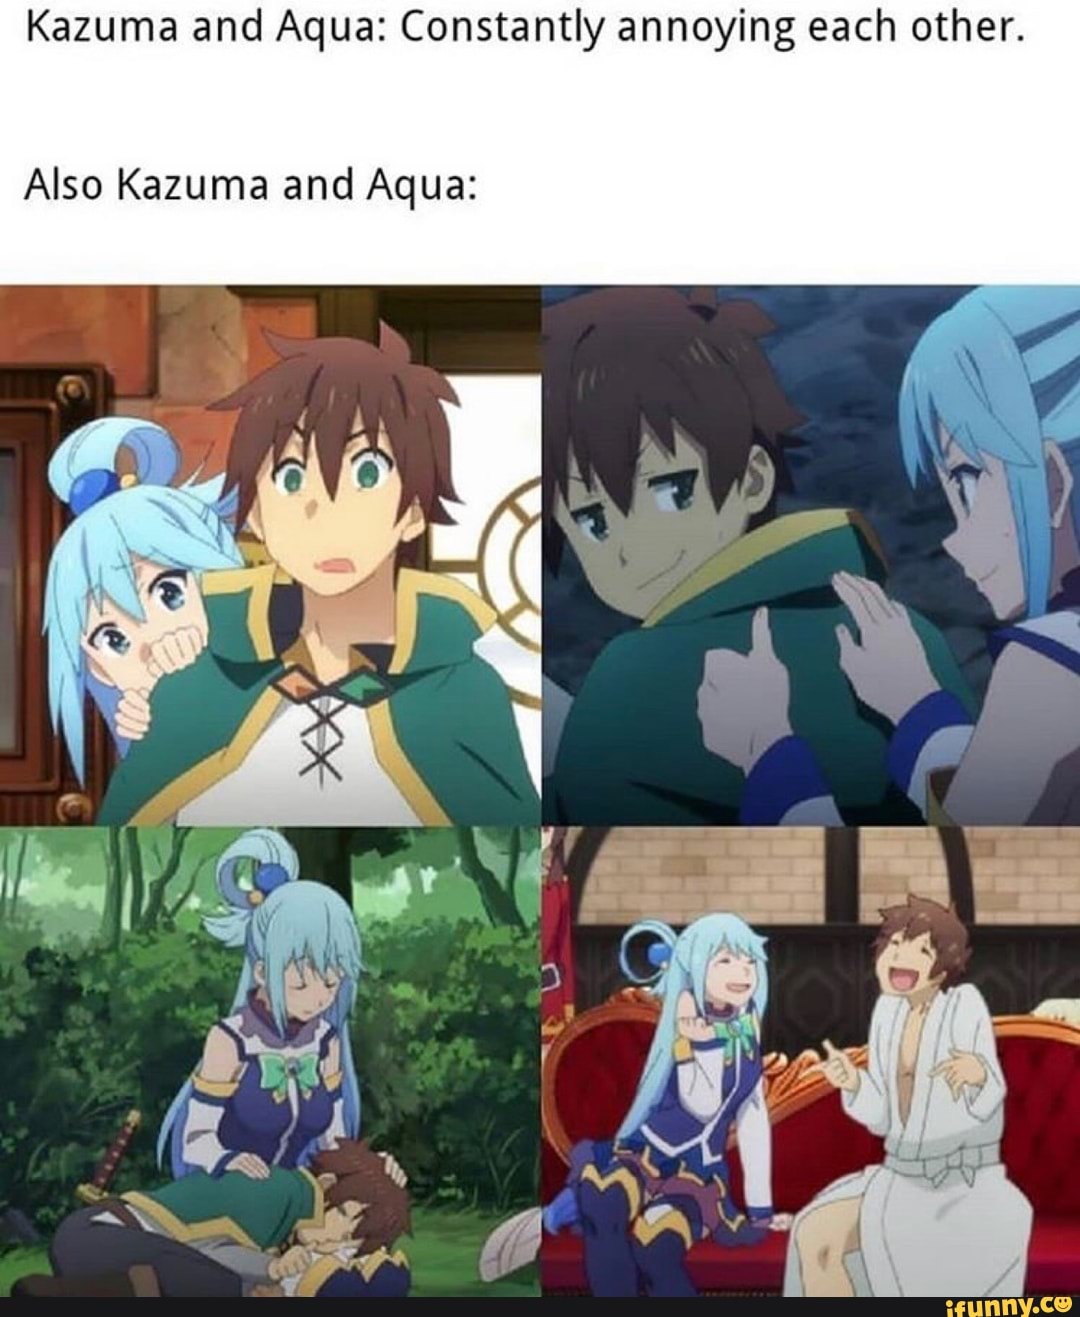 Kazuma calling Aqua useless (as always)